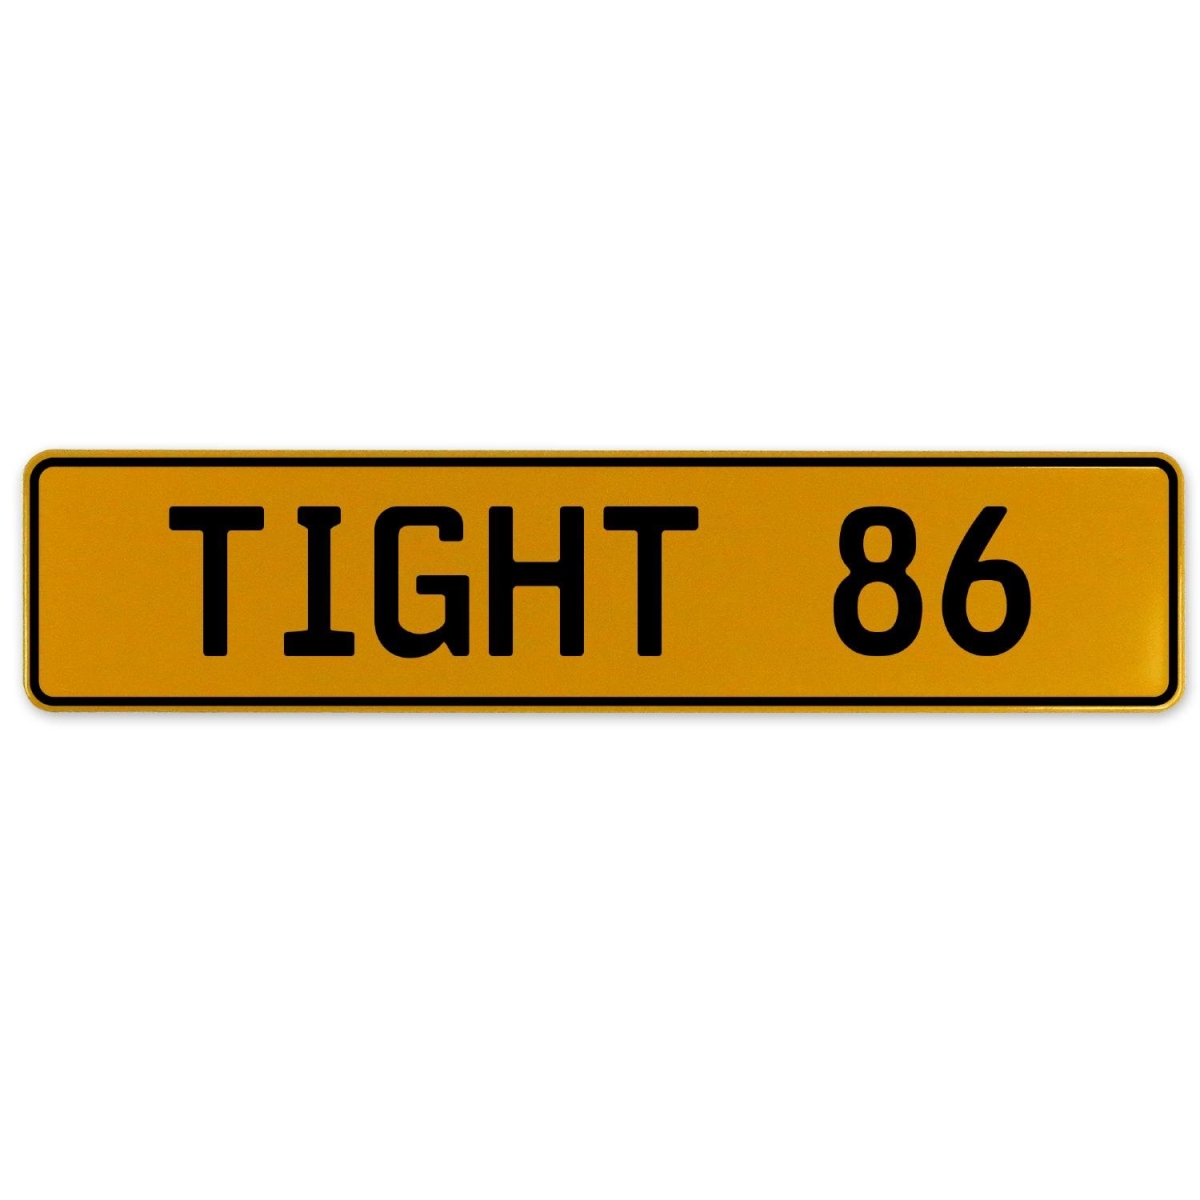 Tight 86 - Yellow Aluminum Street Sign Mancave Euro Plate Name Door Sign Wall